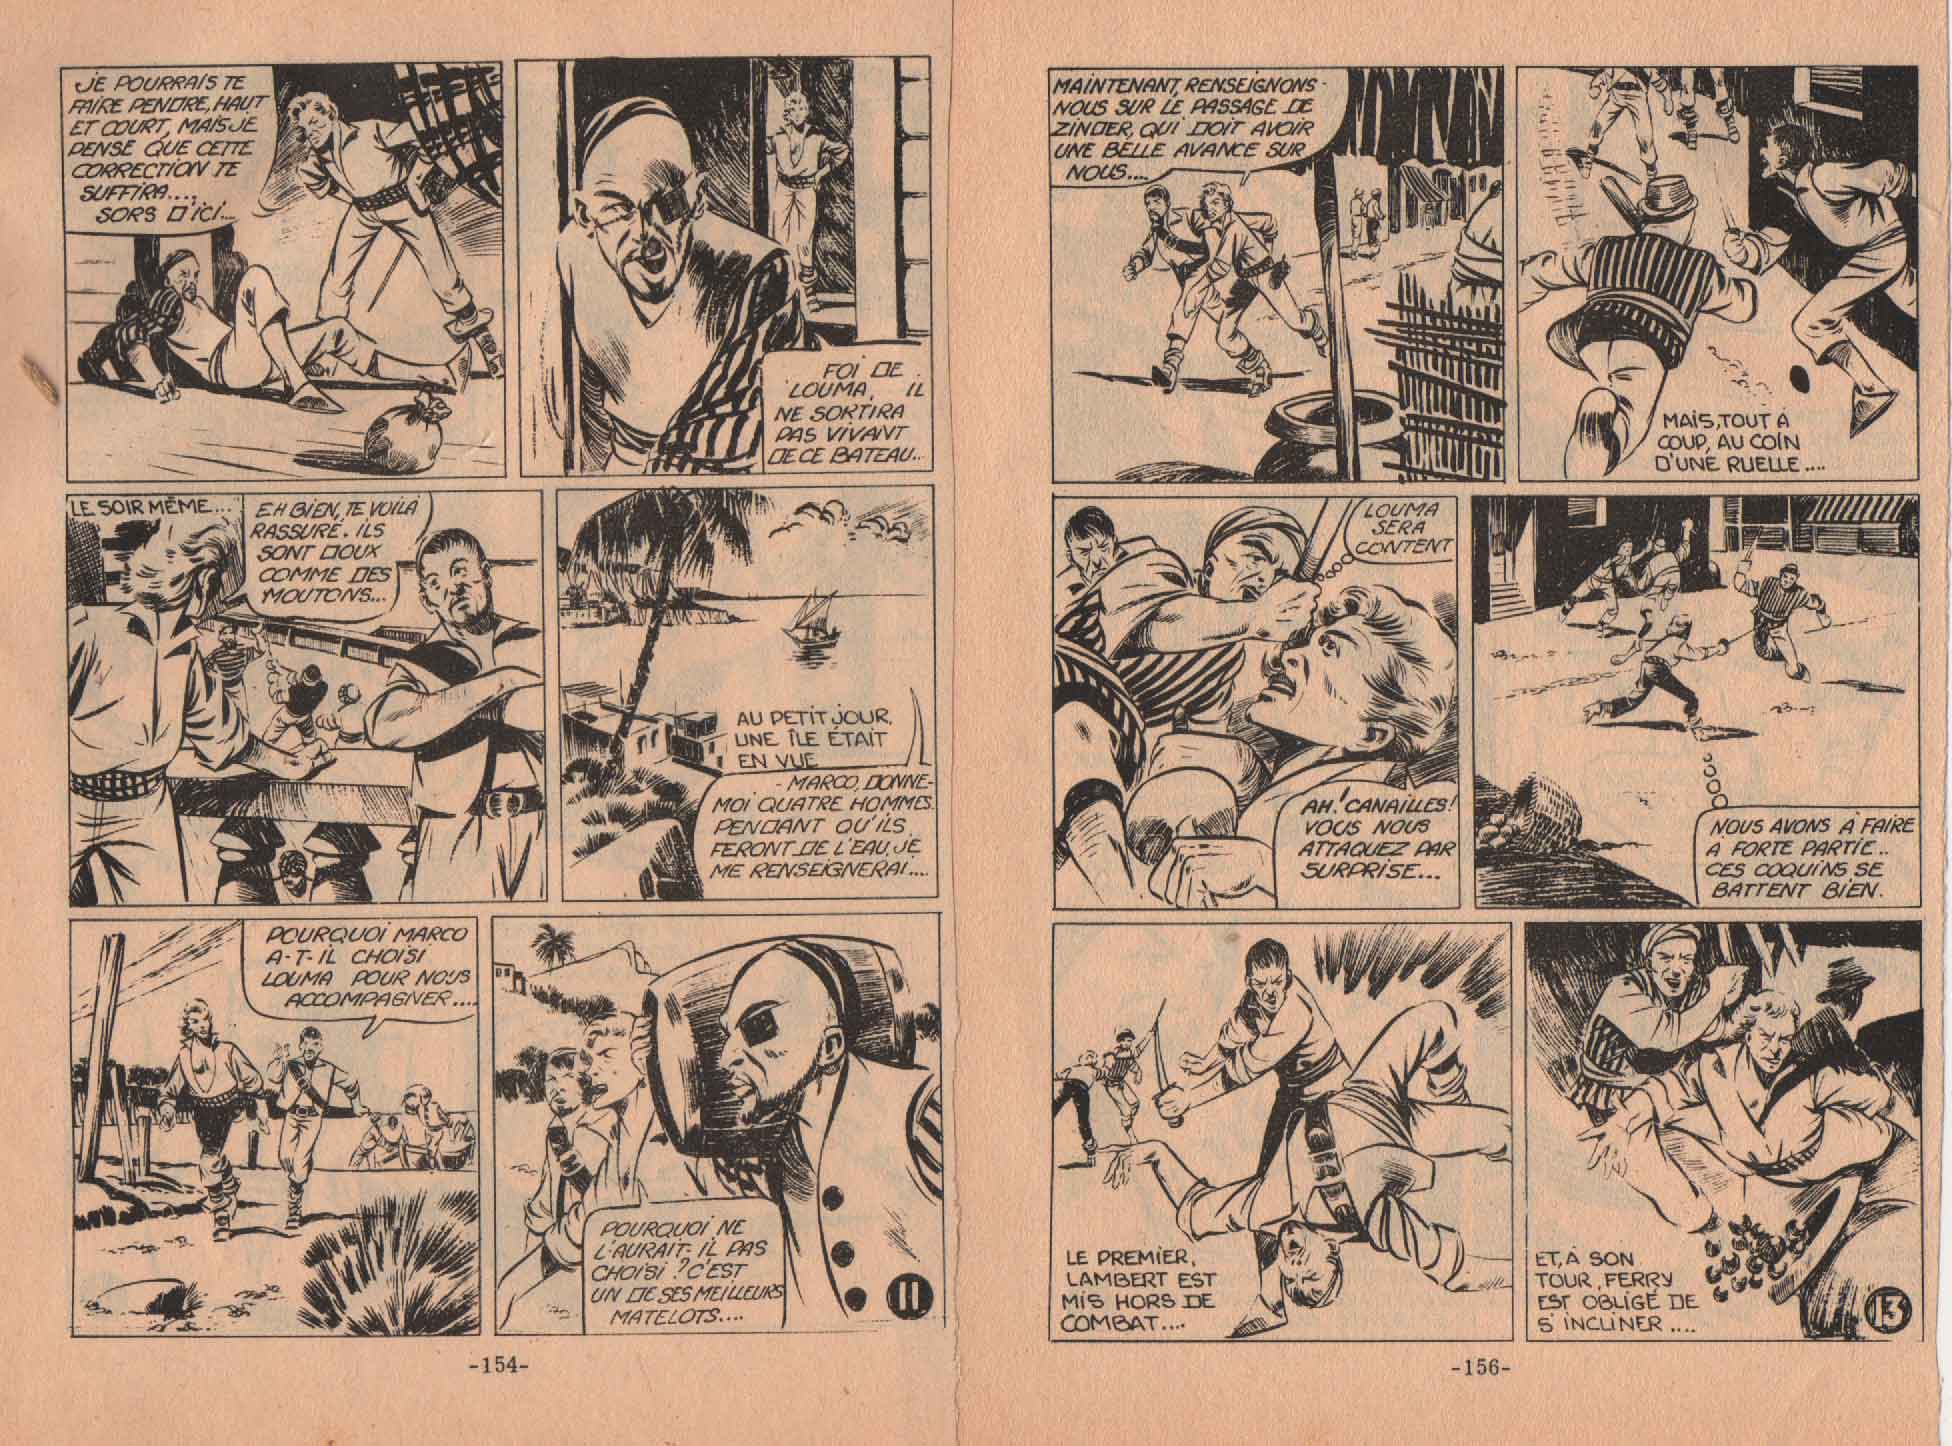 « Ferry Tempête » Zorro spécial n° 5 (juin 1959).